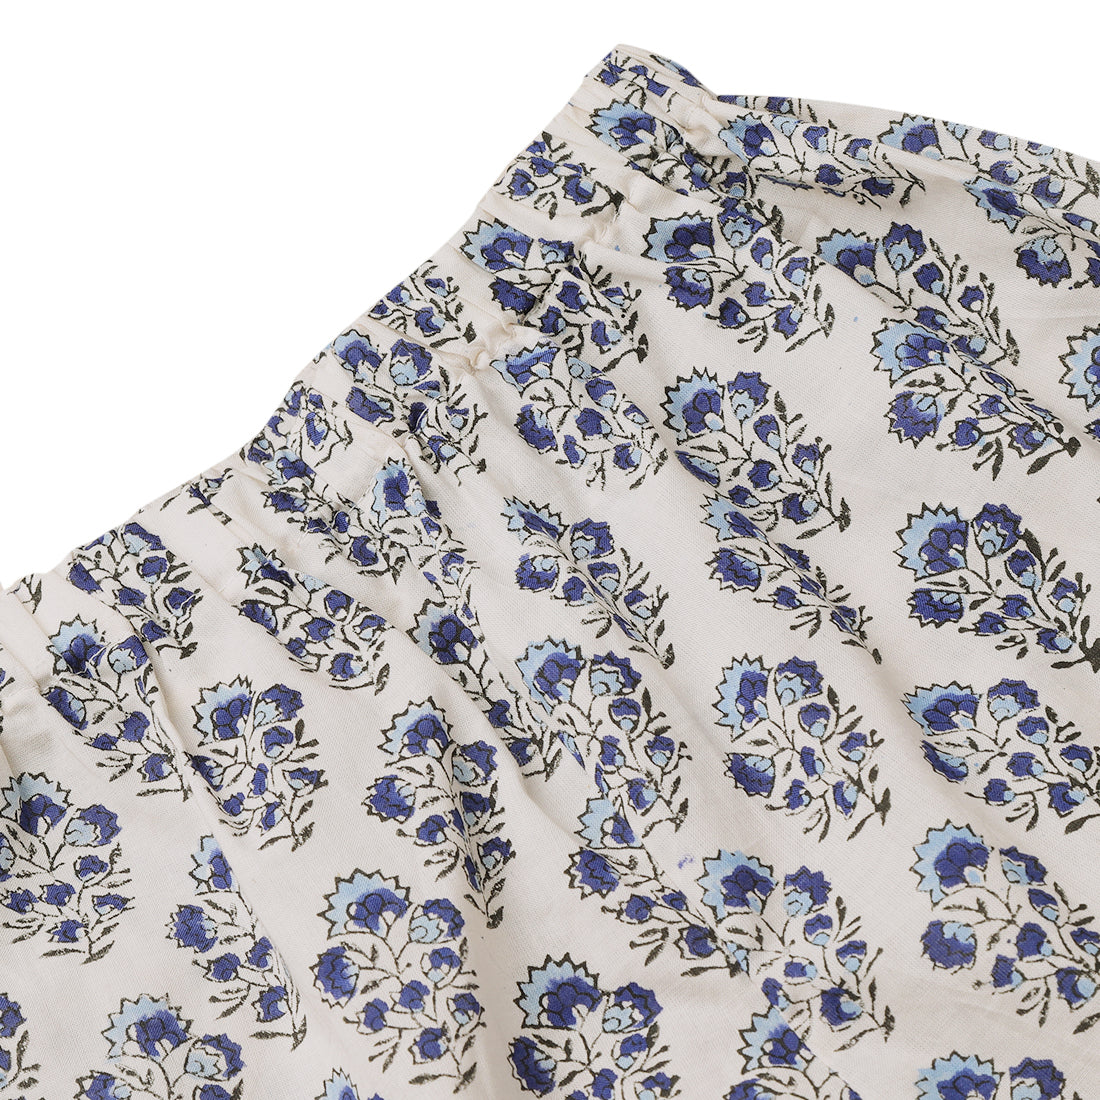 Girls Elastic Cotton Shorts, Dark Blue Block Print for 2 yrs to 6 yrs -Close-up